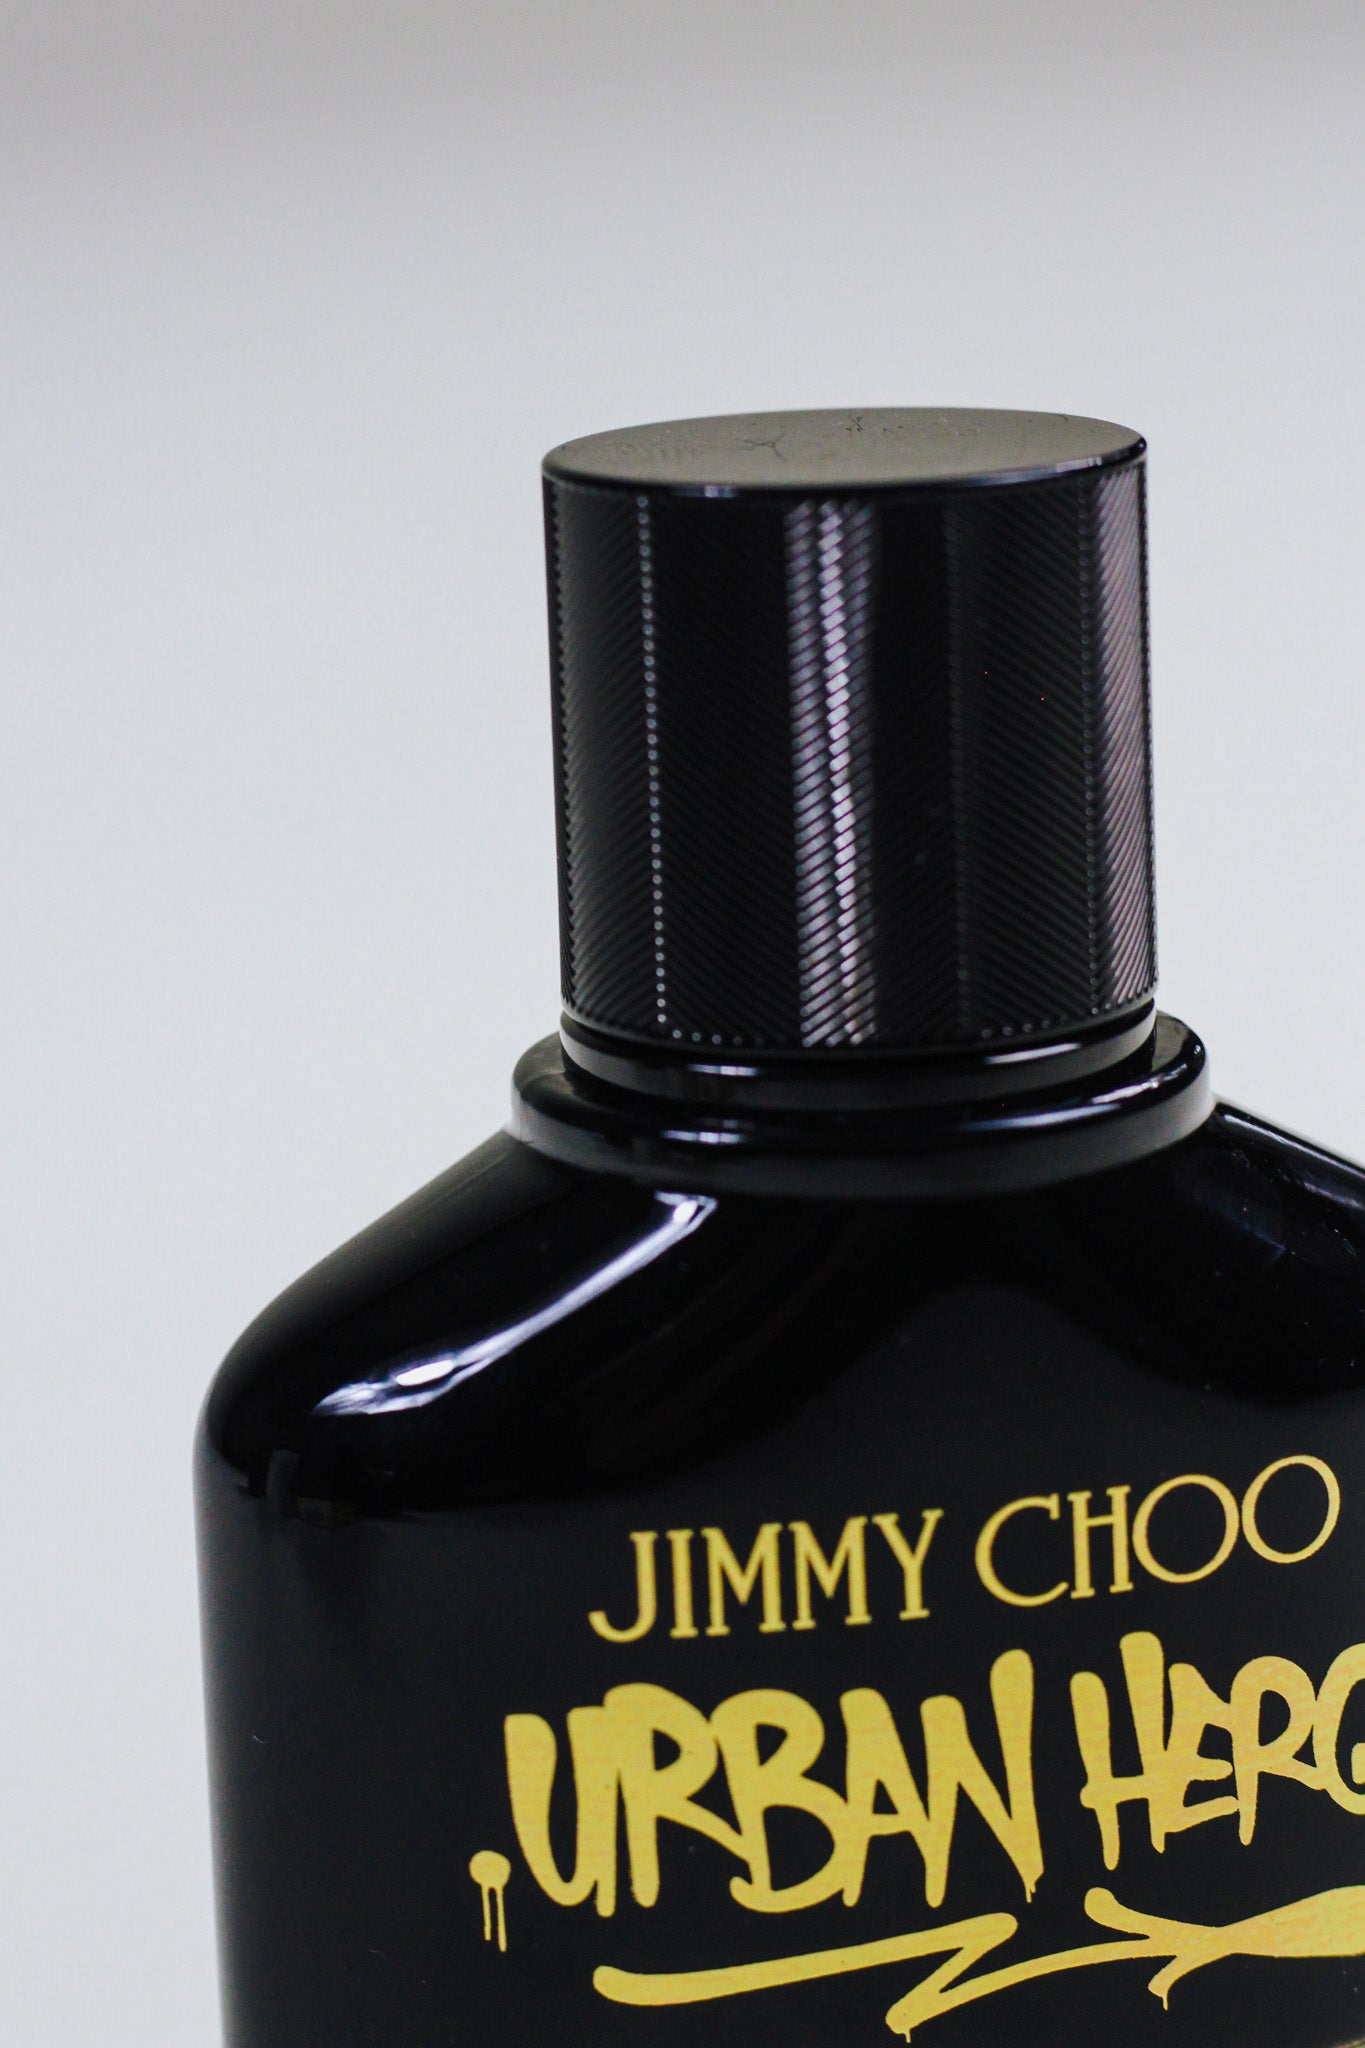 Parfum Jimmy Urban Eau Spray – Dales Inc De Choo Clothing Hero